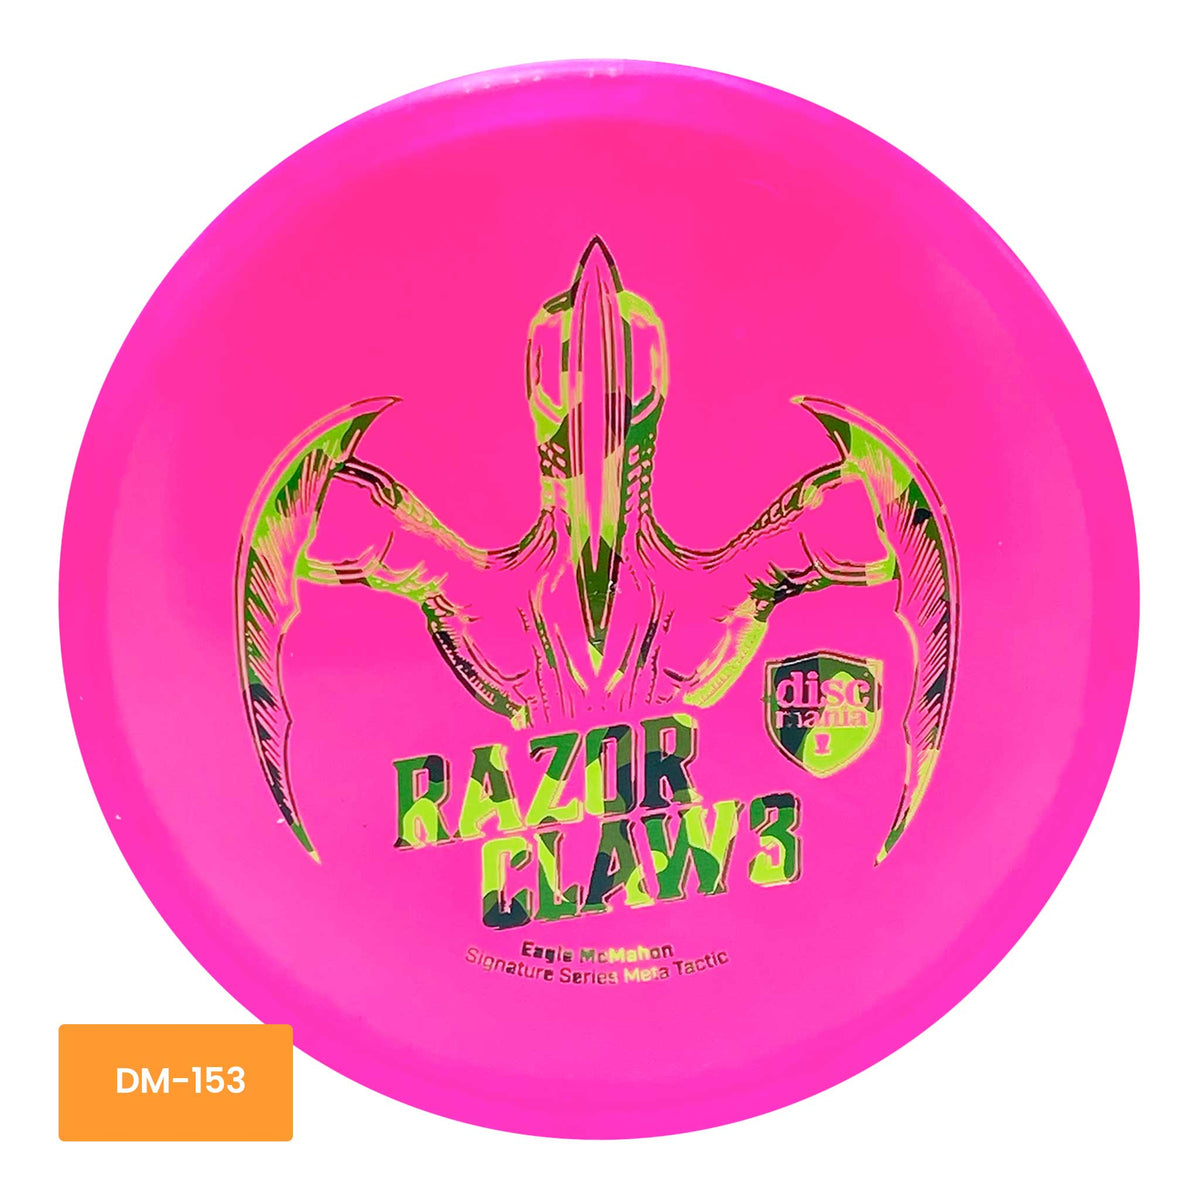 Discmania Eagle McMahon Razor Claw 3 Tactic approach disc - Pink/Camo